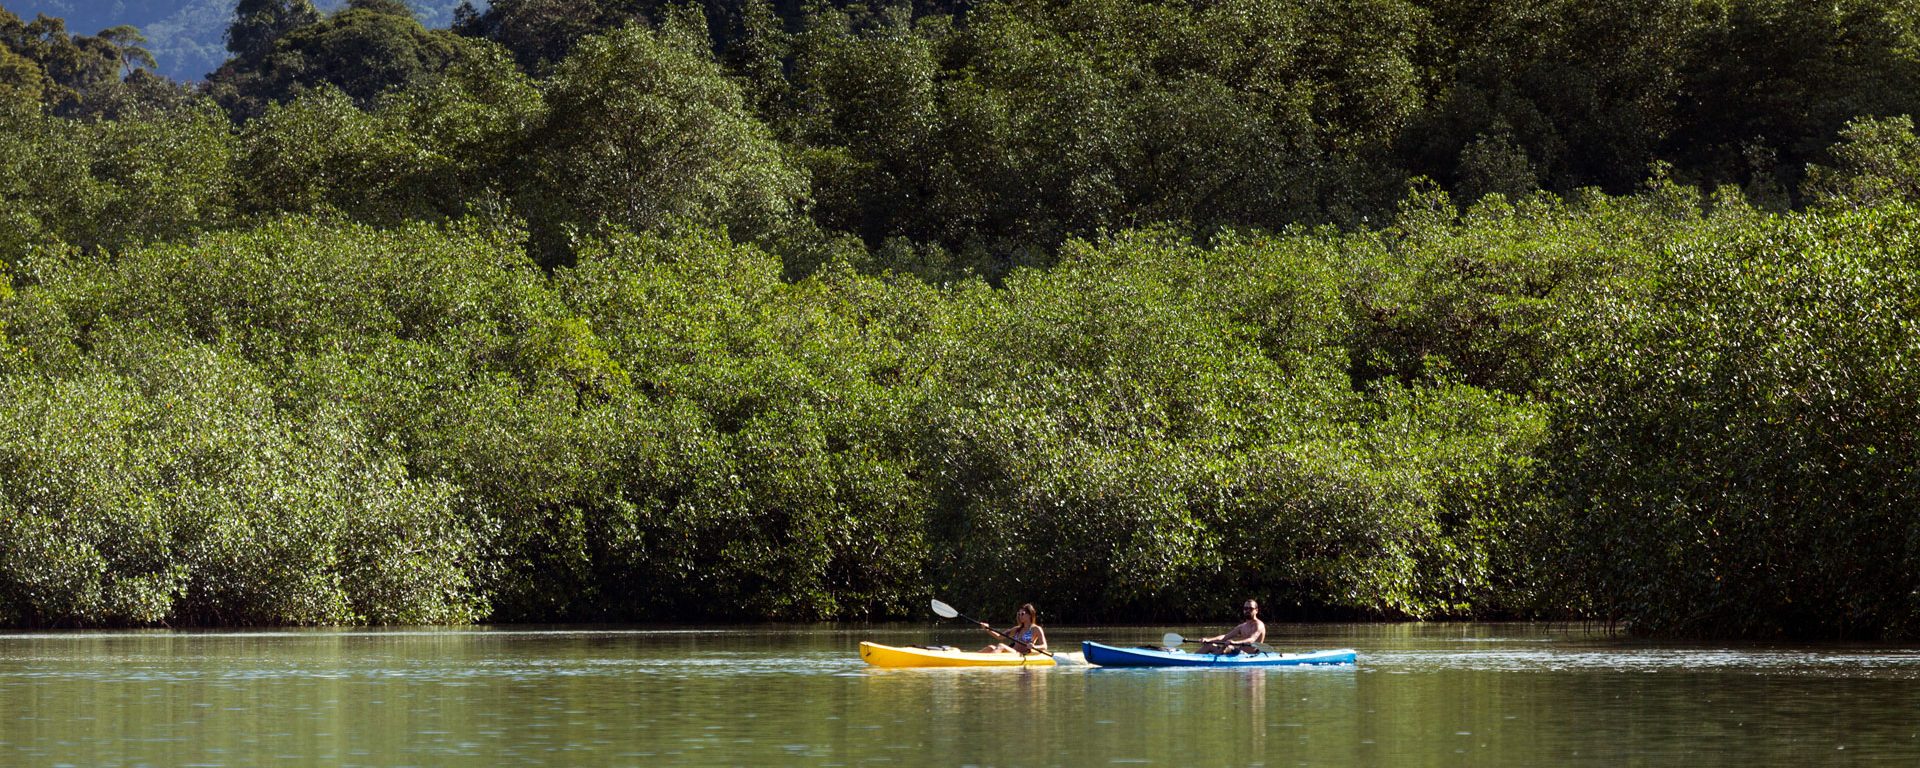 Kayakers on a river in Piedras Blancas National Park, Puntarenas, Costa Rica